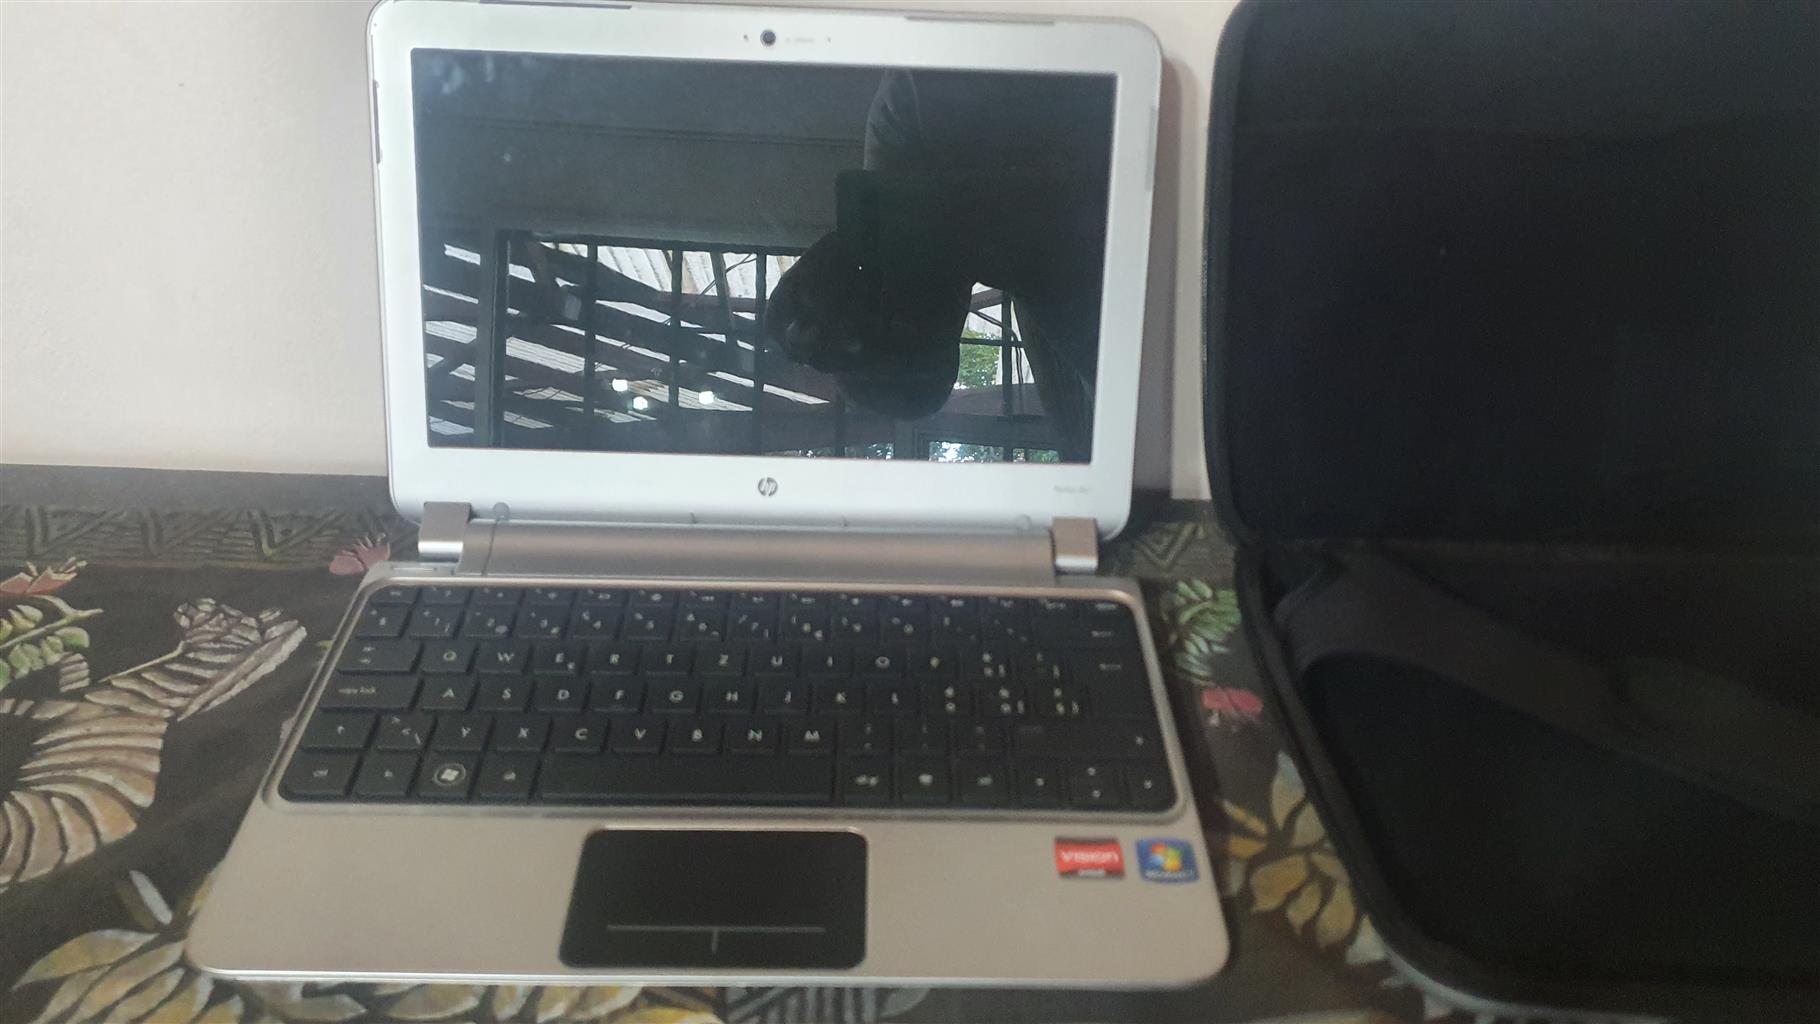 Small laptop HP Pavilion dm1320gb Harddrive, 2gb ram, Windows 7 